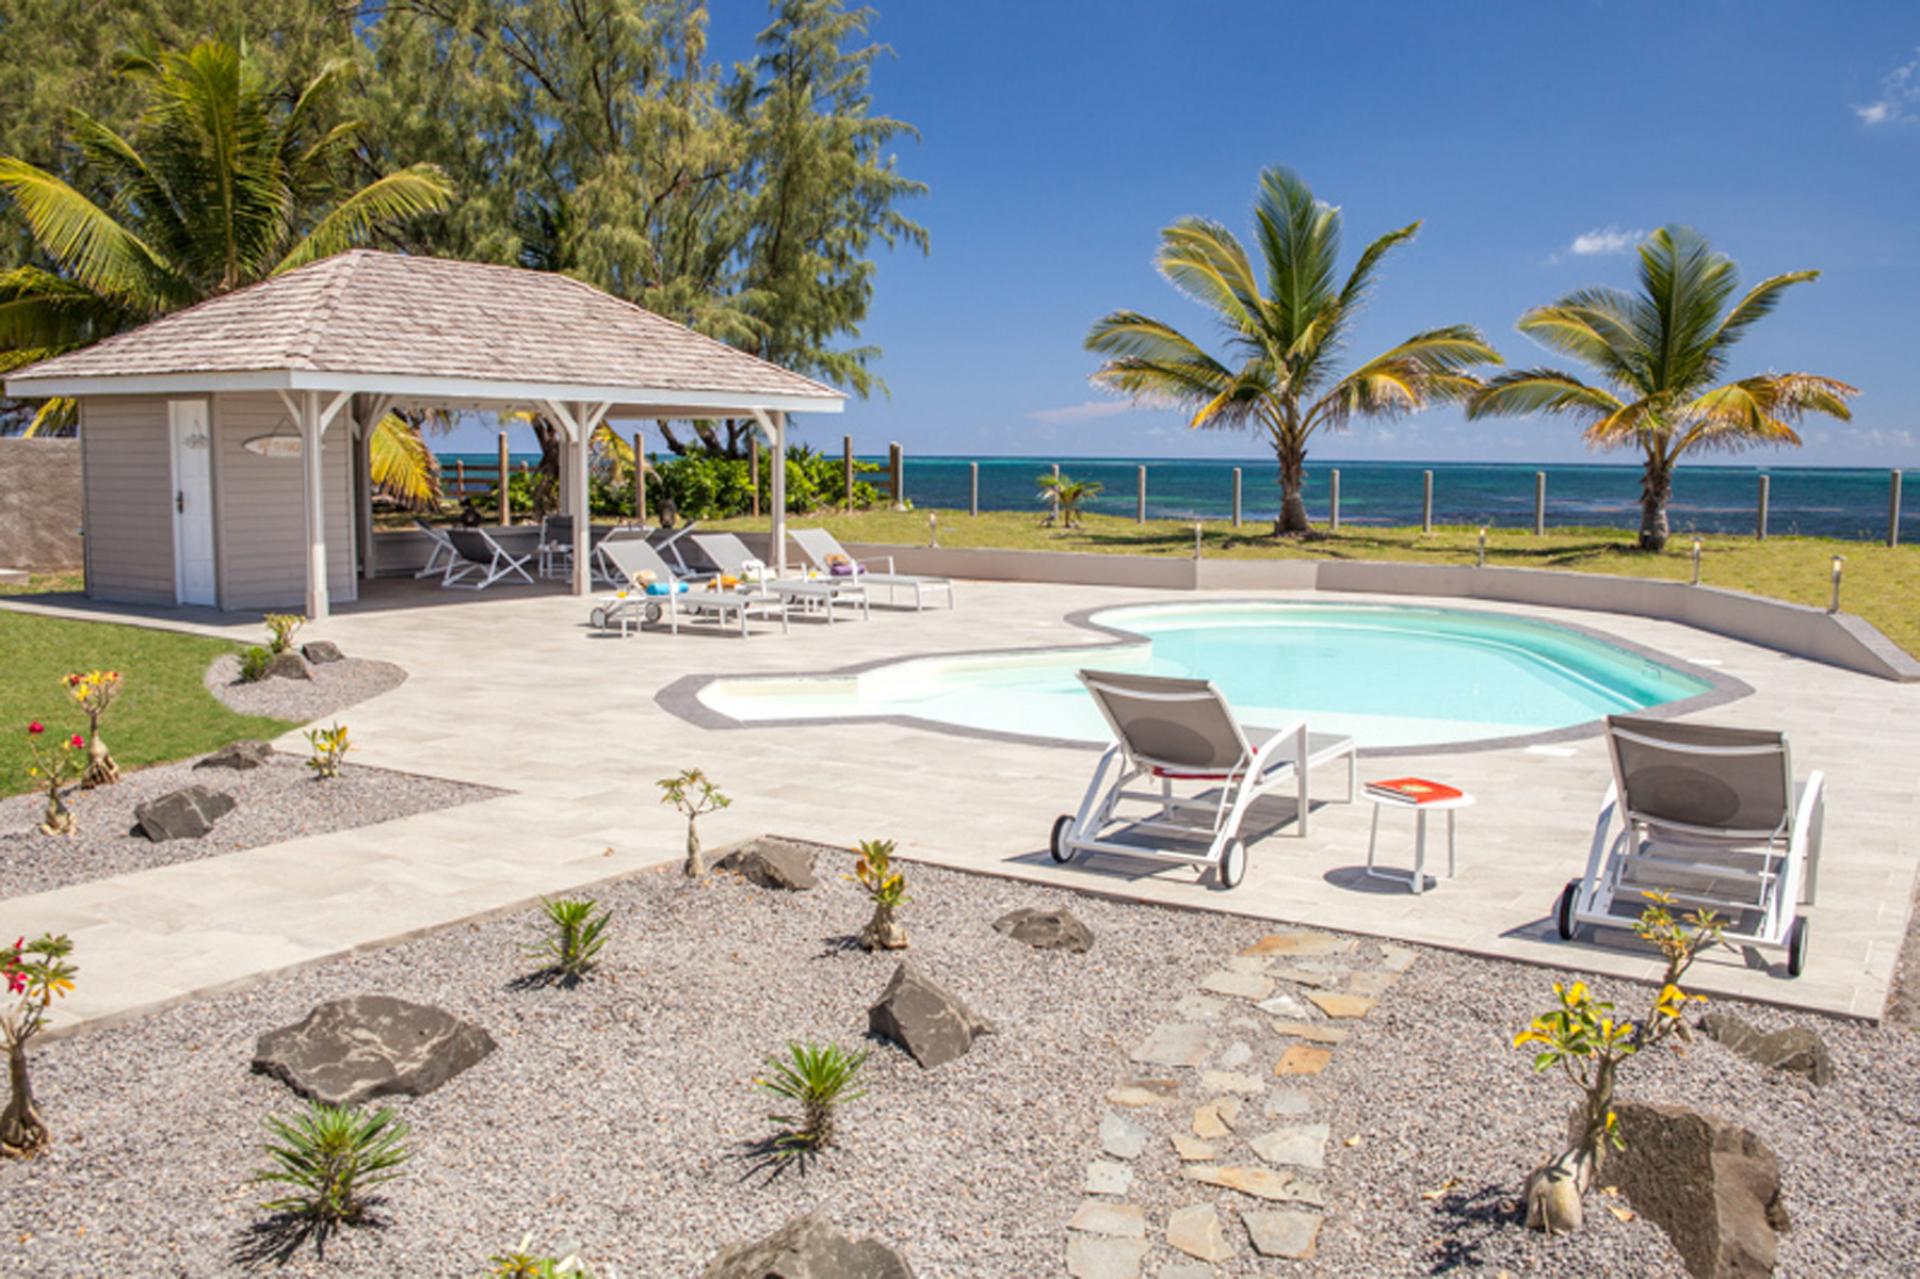 Villa luxe Martinique - Piscine, carbet et vue mer